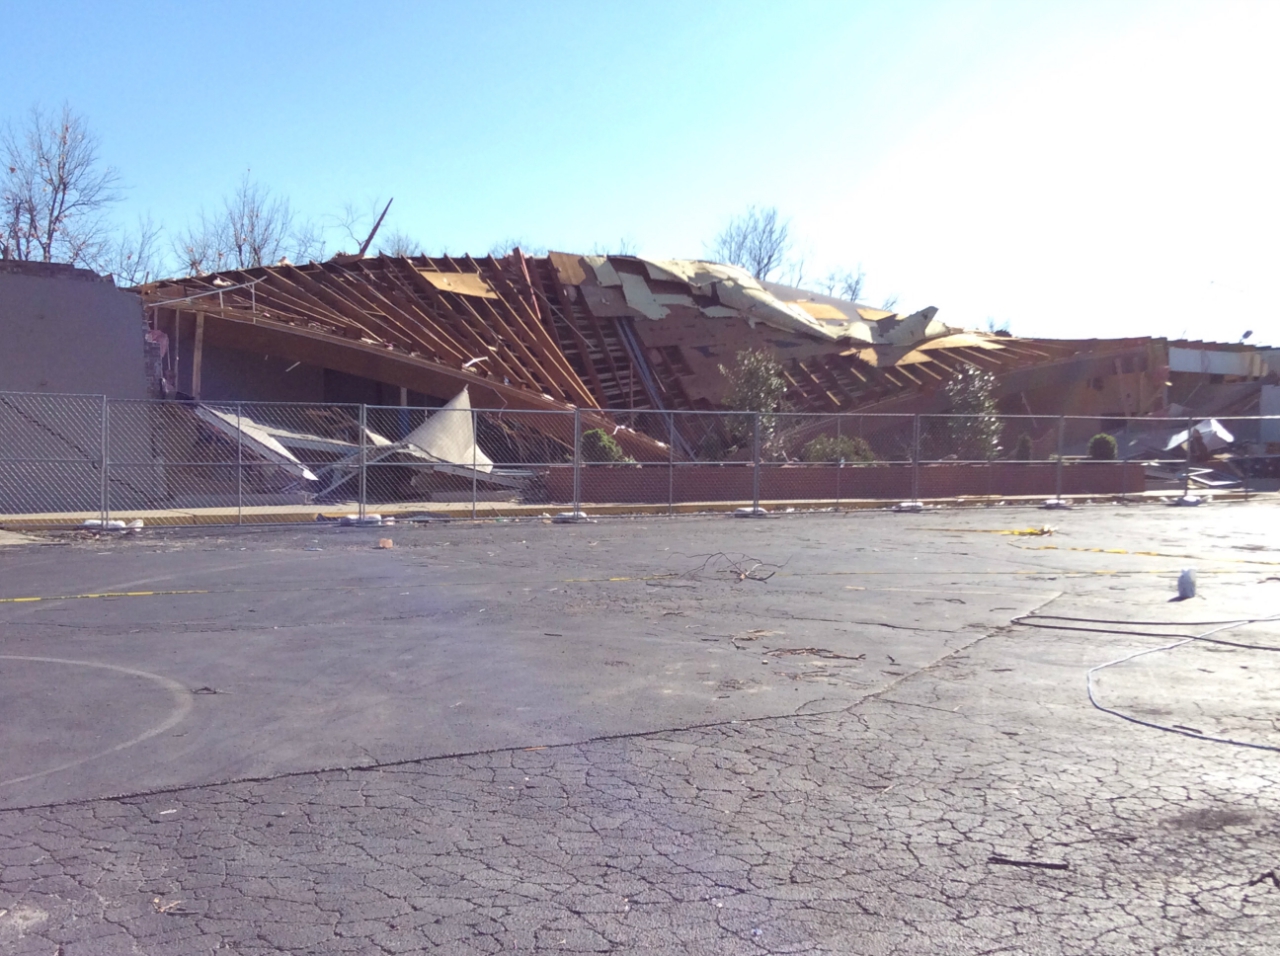 Aim High Academy damage. Image: NWS Tulsa